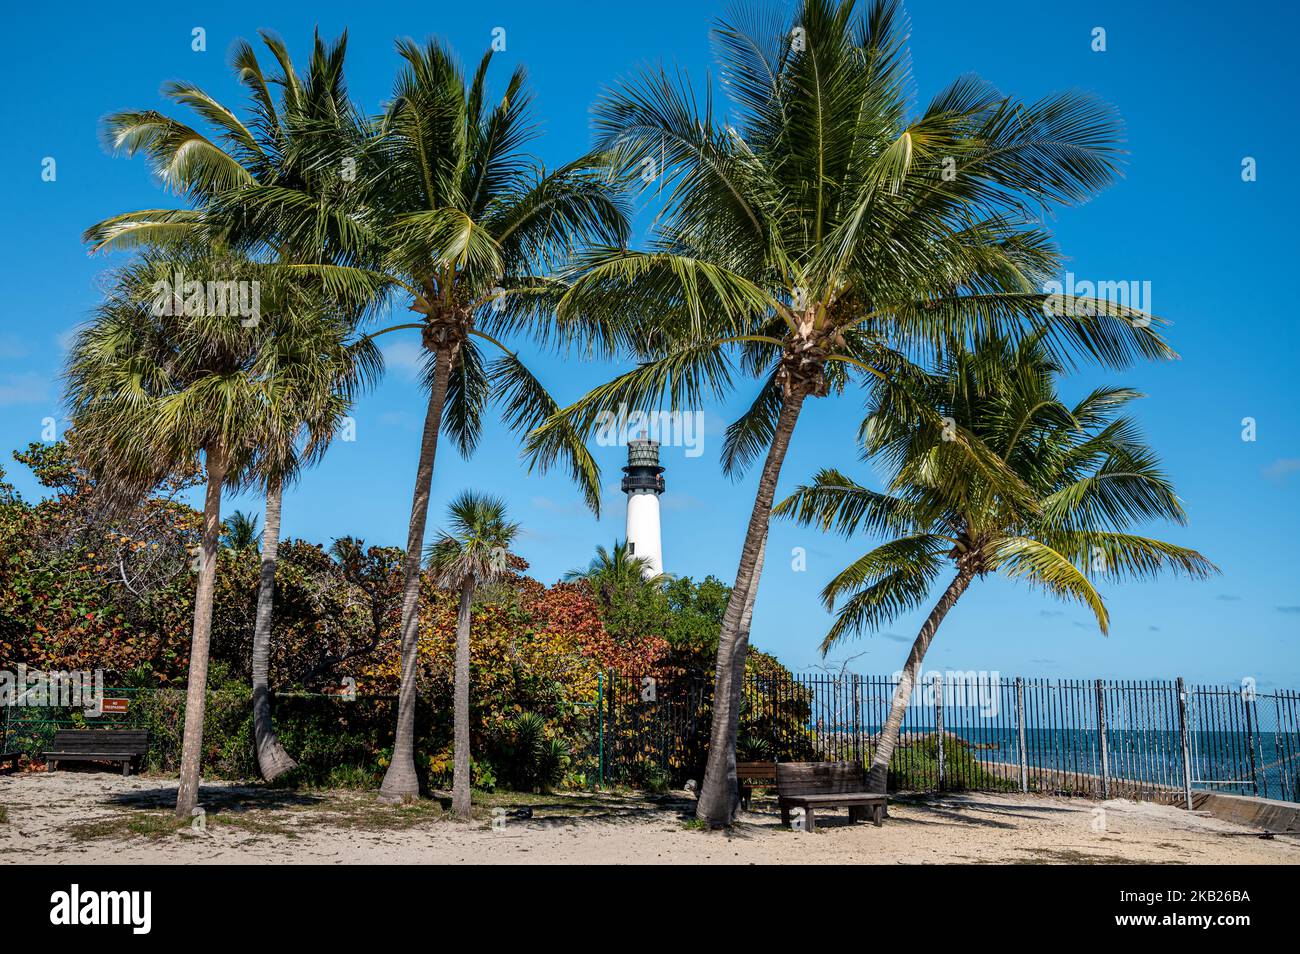 Cape Florida Lighthouse, Palm trees, Sunny day - Key Biscayne Stock Photo